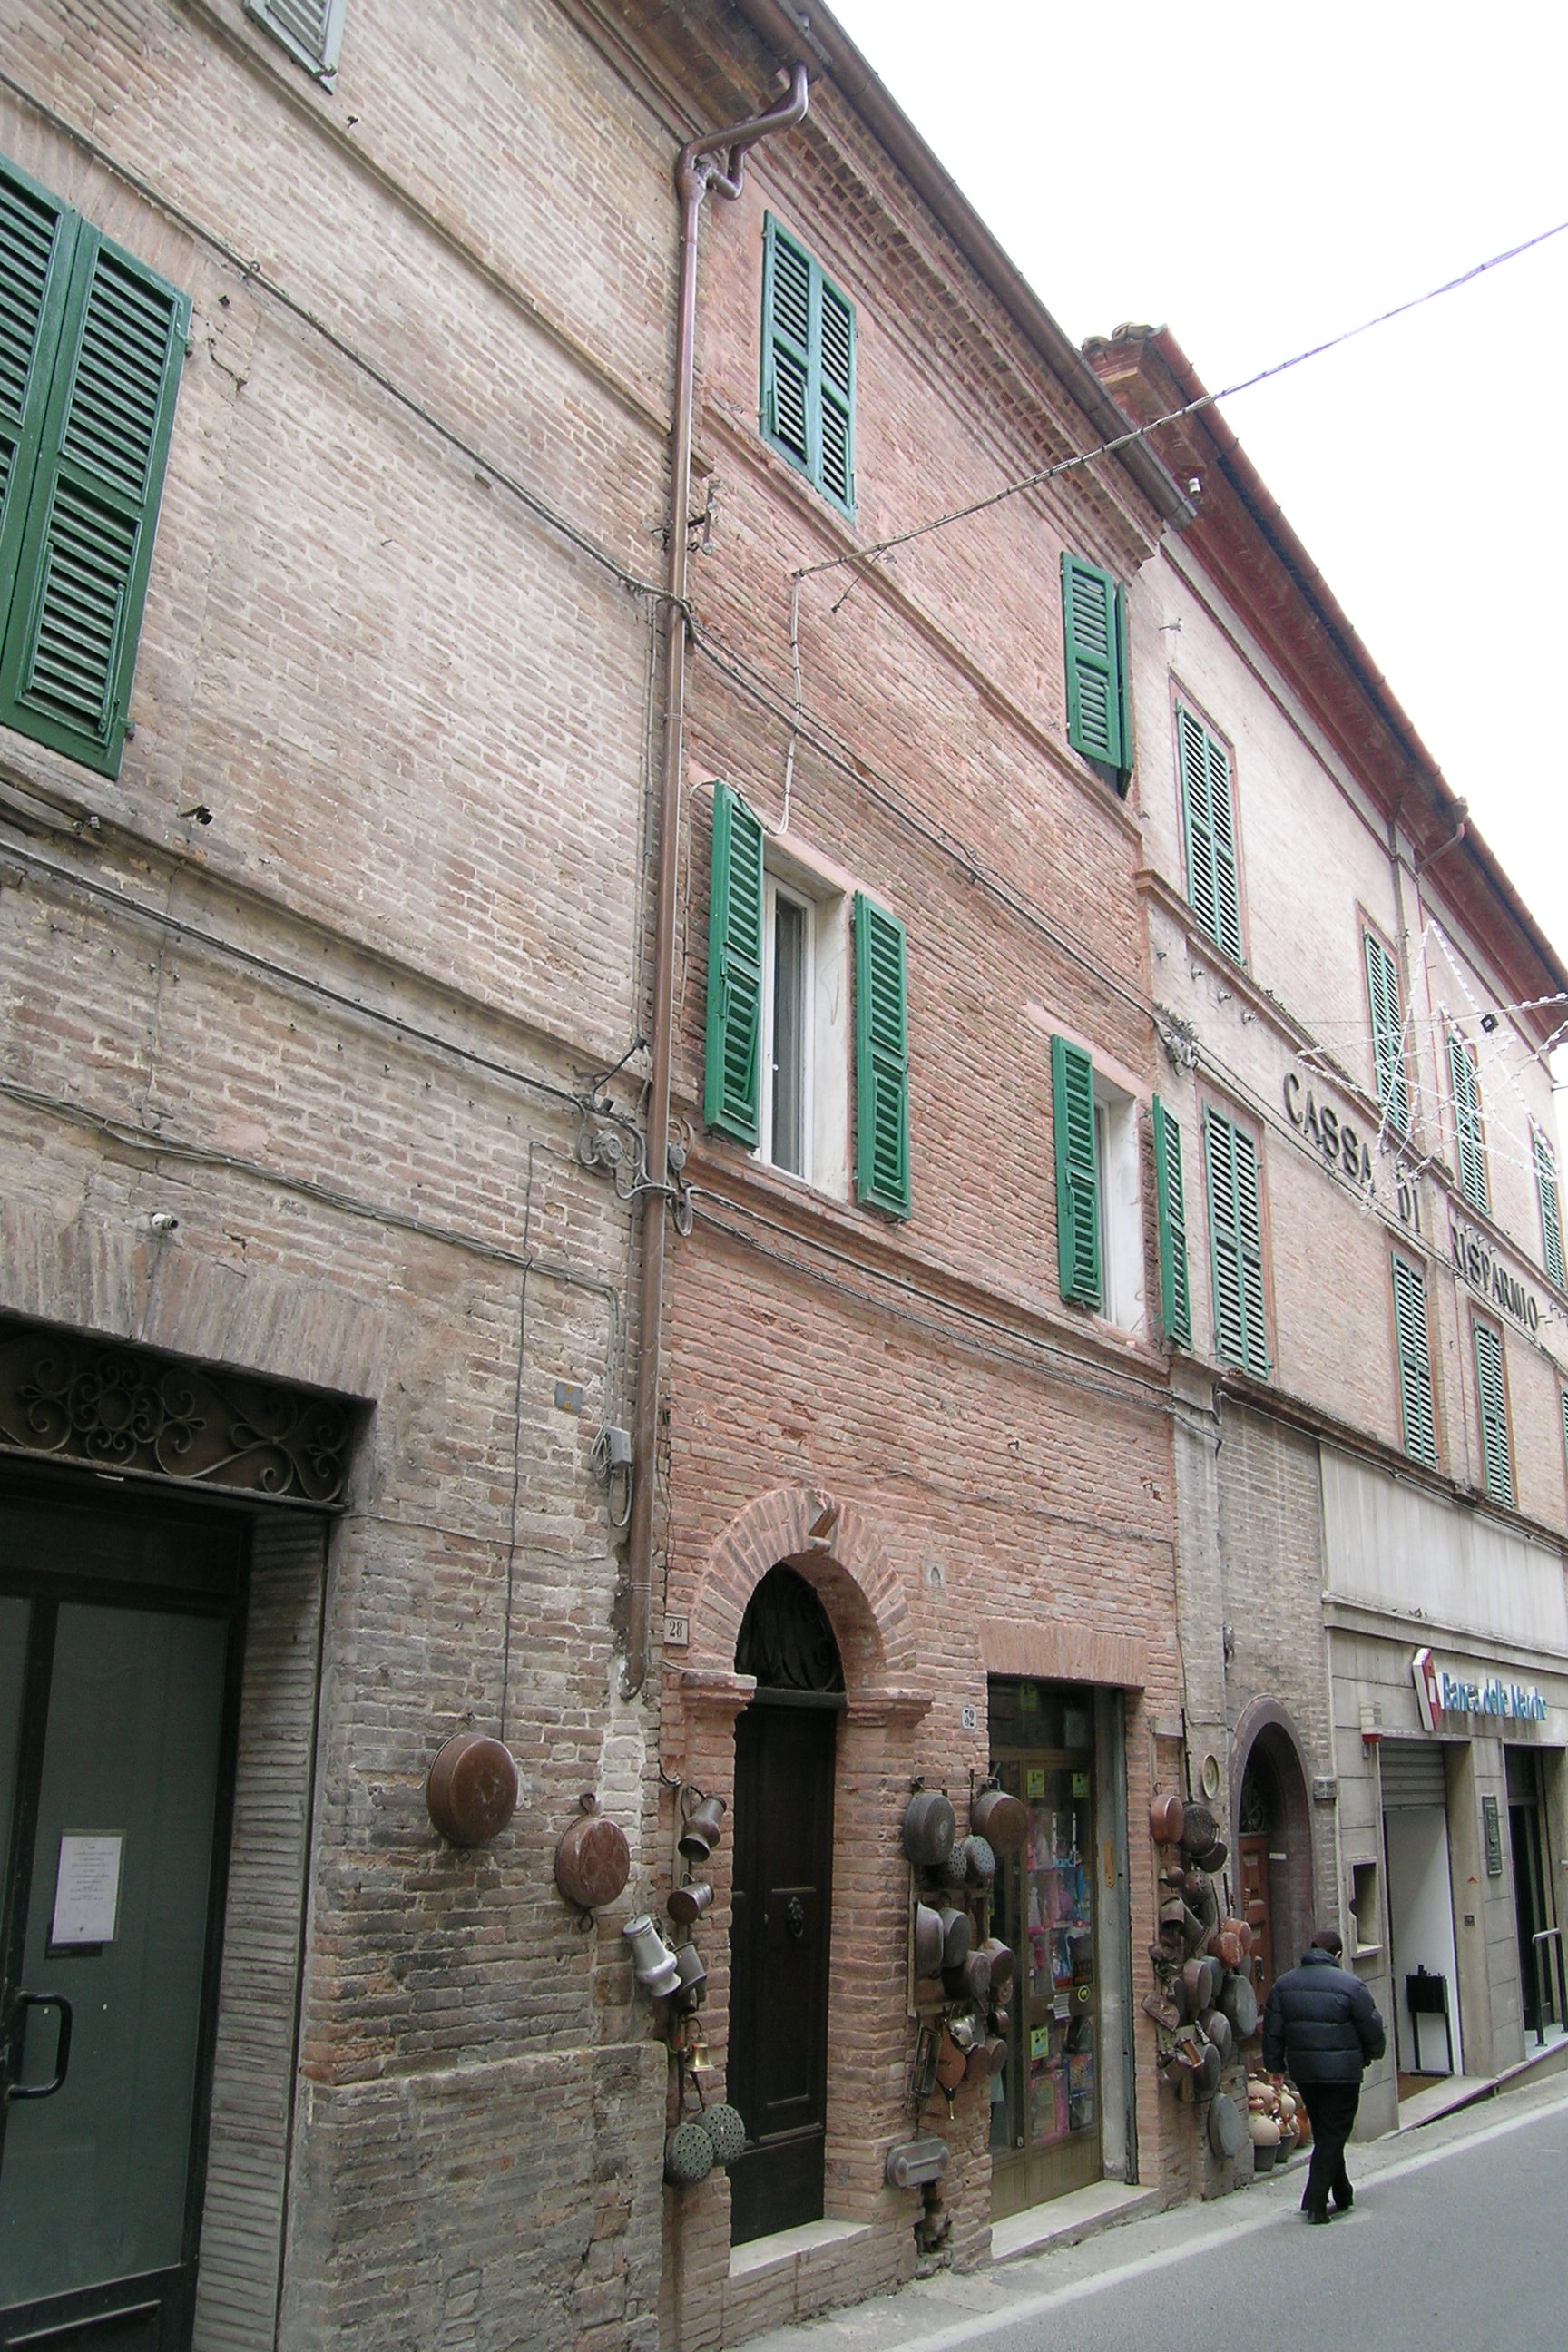 Palazzo signorile (palazzo, signorile) - Caldarola (MC) 